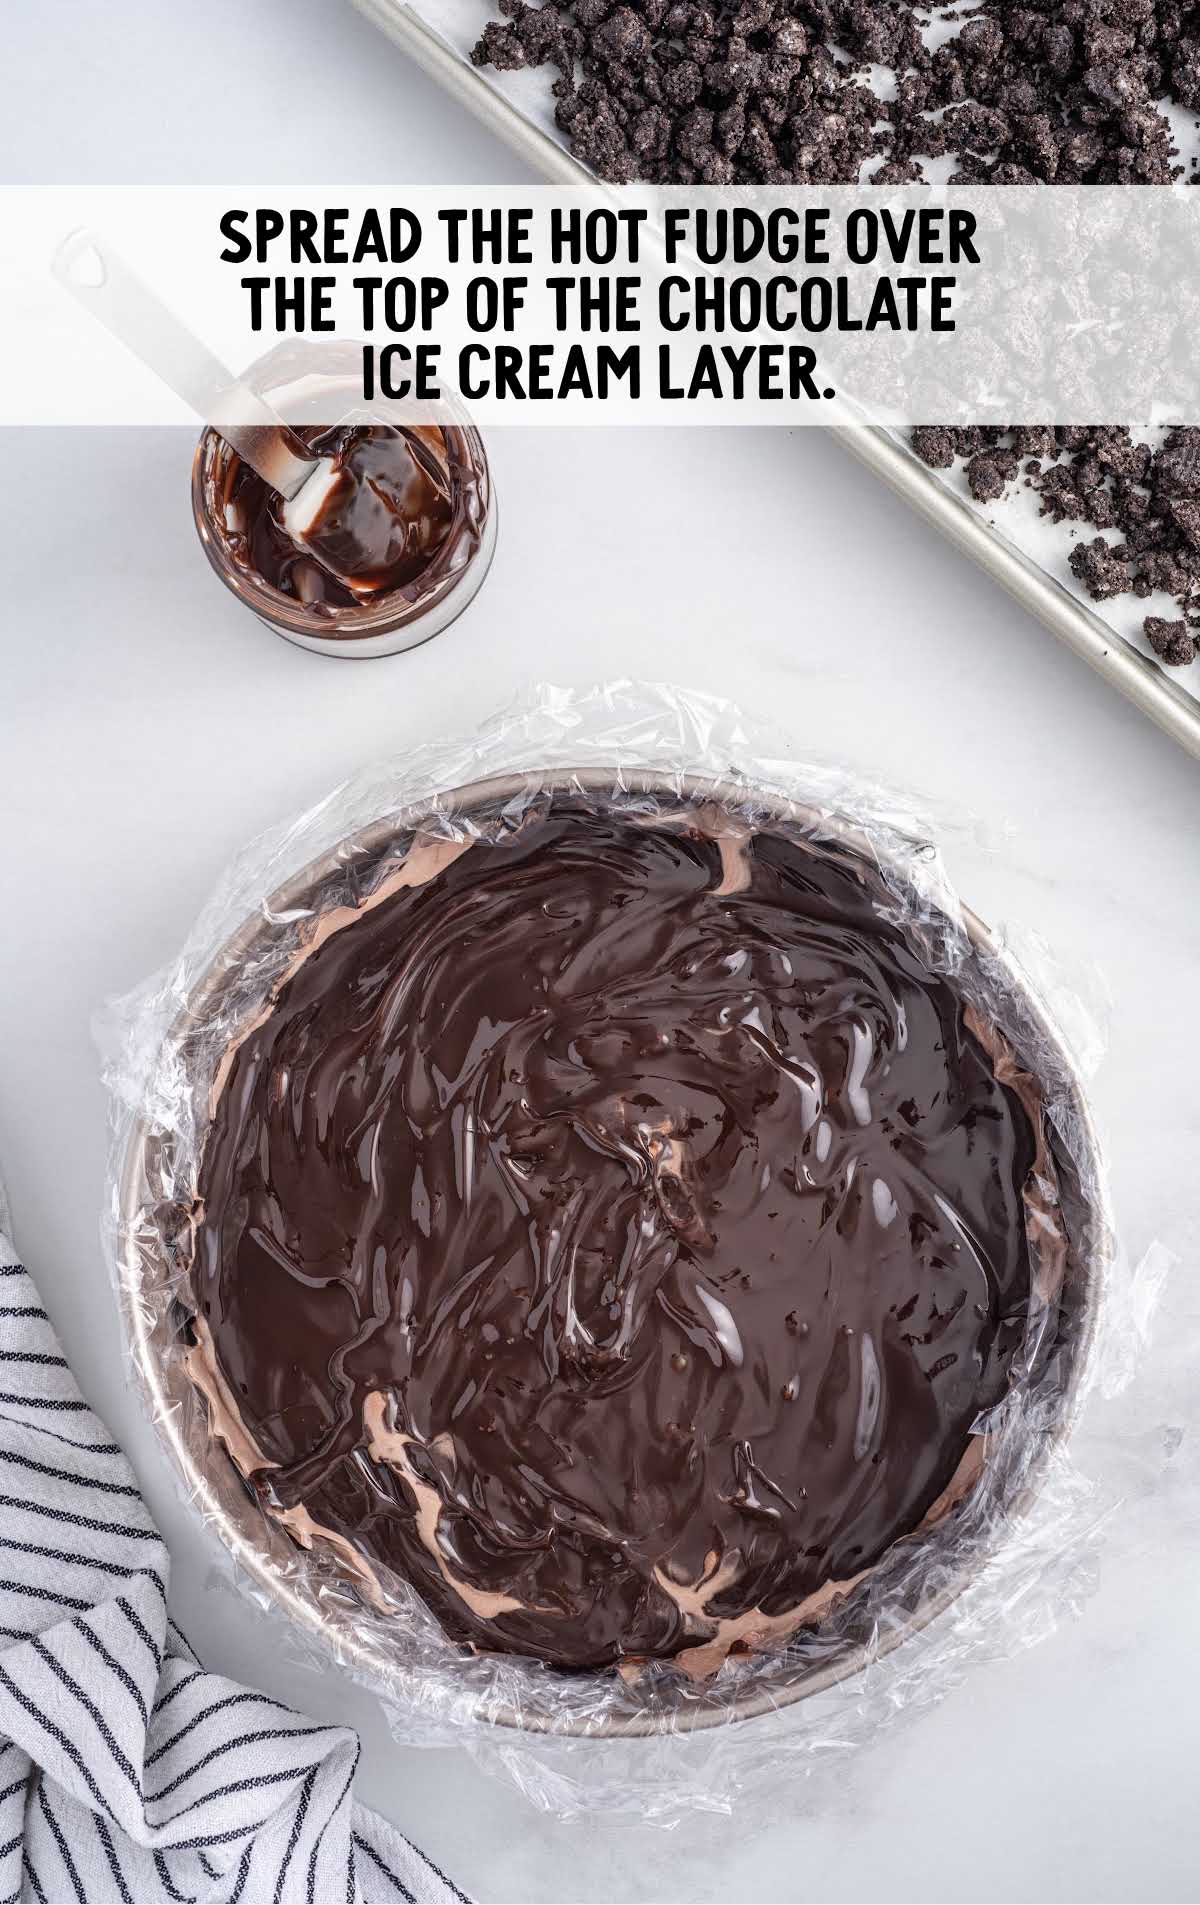 hot fudge spread over the chocolate ice cream layer